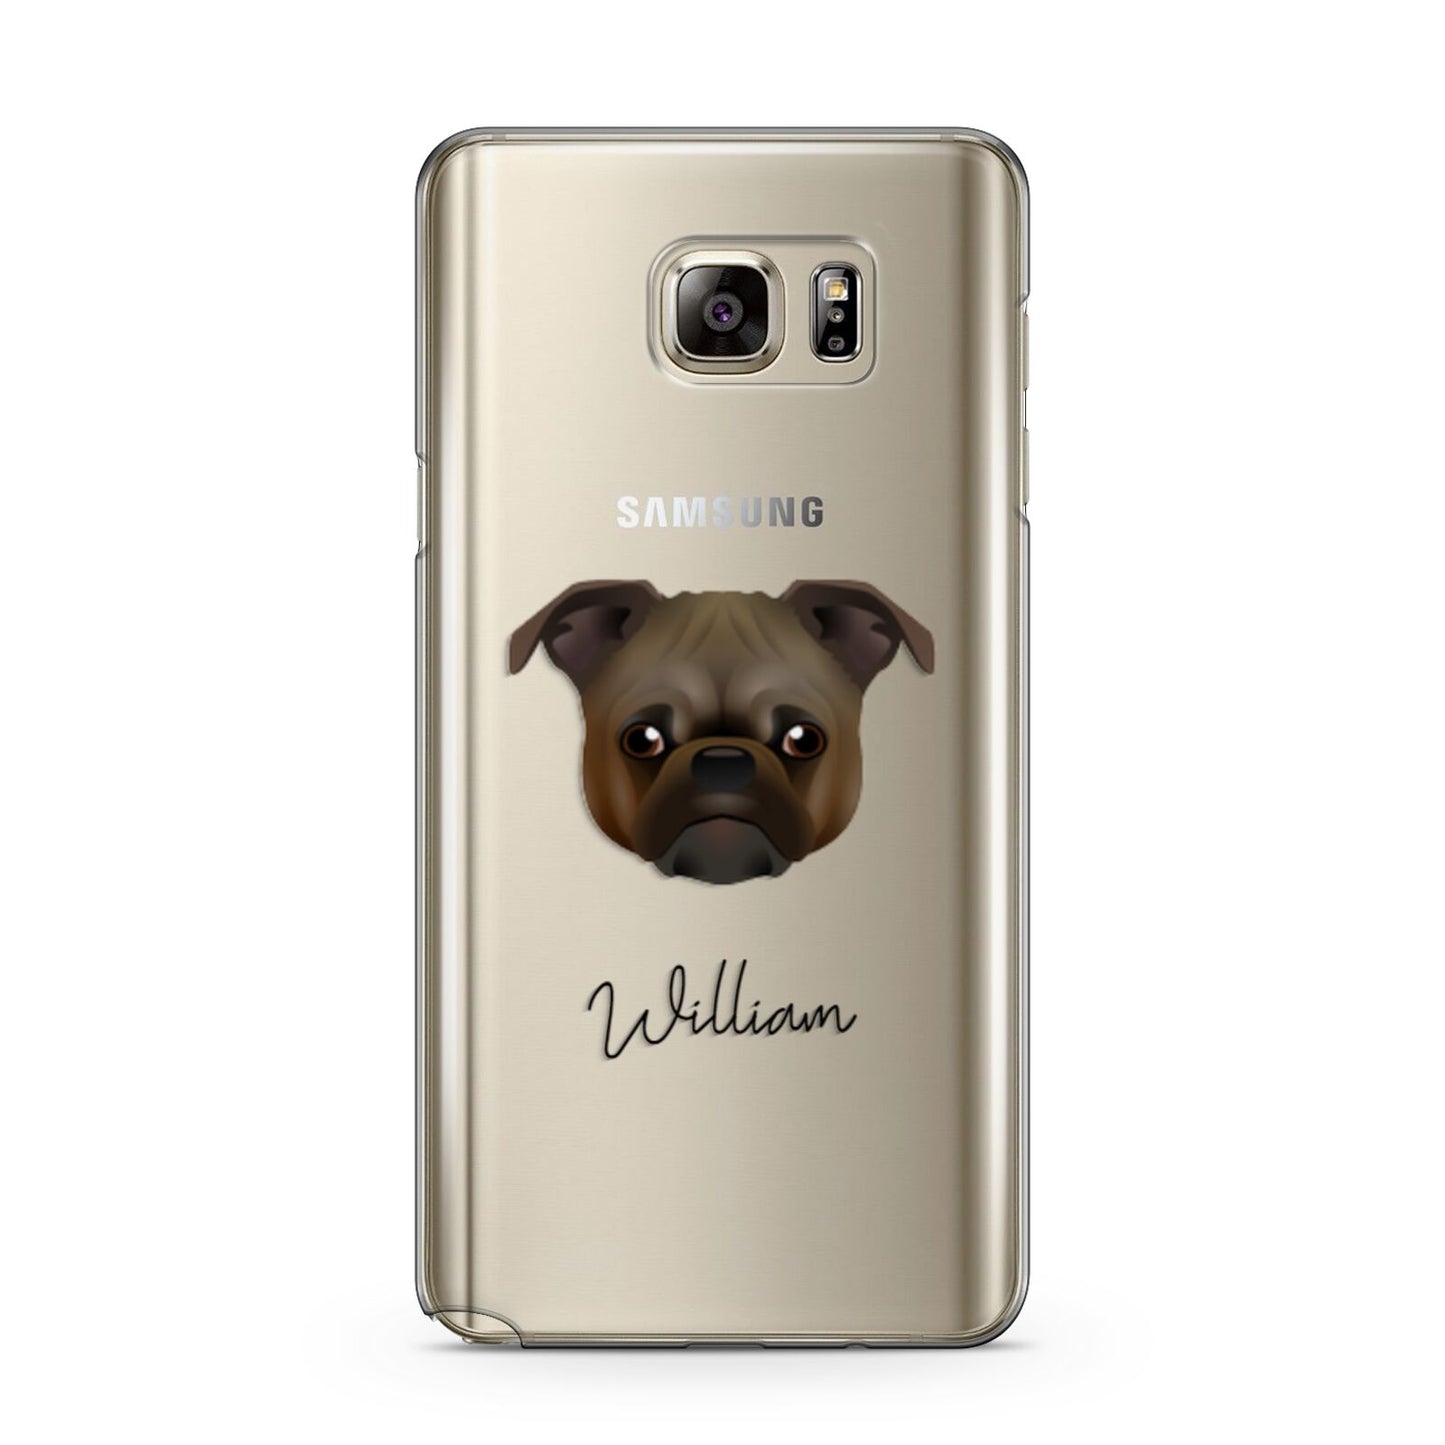 Chug Personalised Samsung Galaxy Note 5 Case